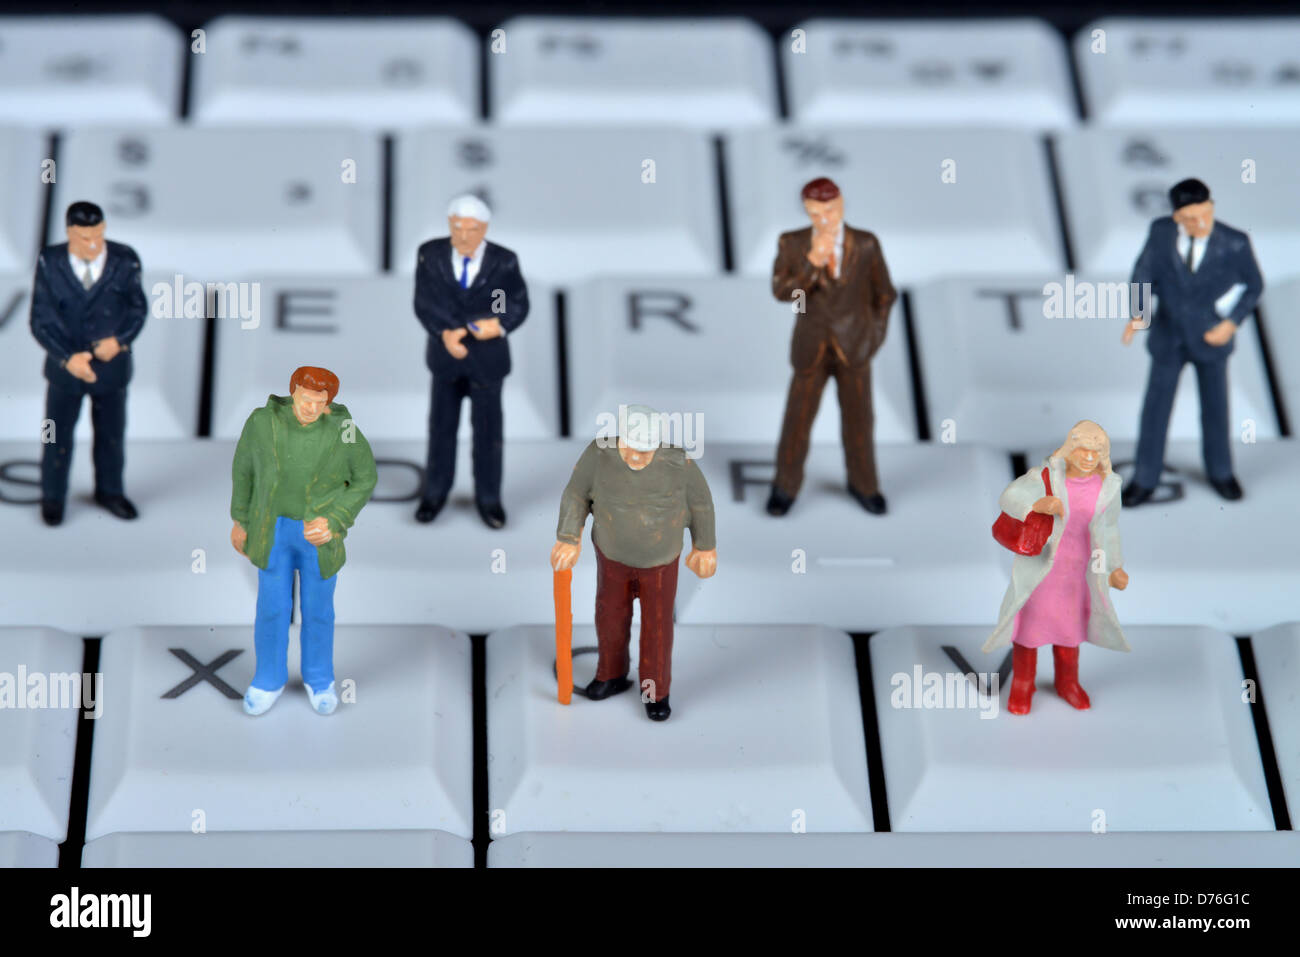 Miniature figures keyboard computer Stock Photo